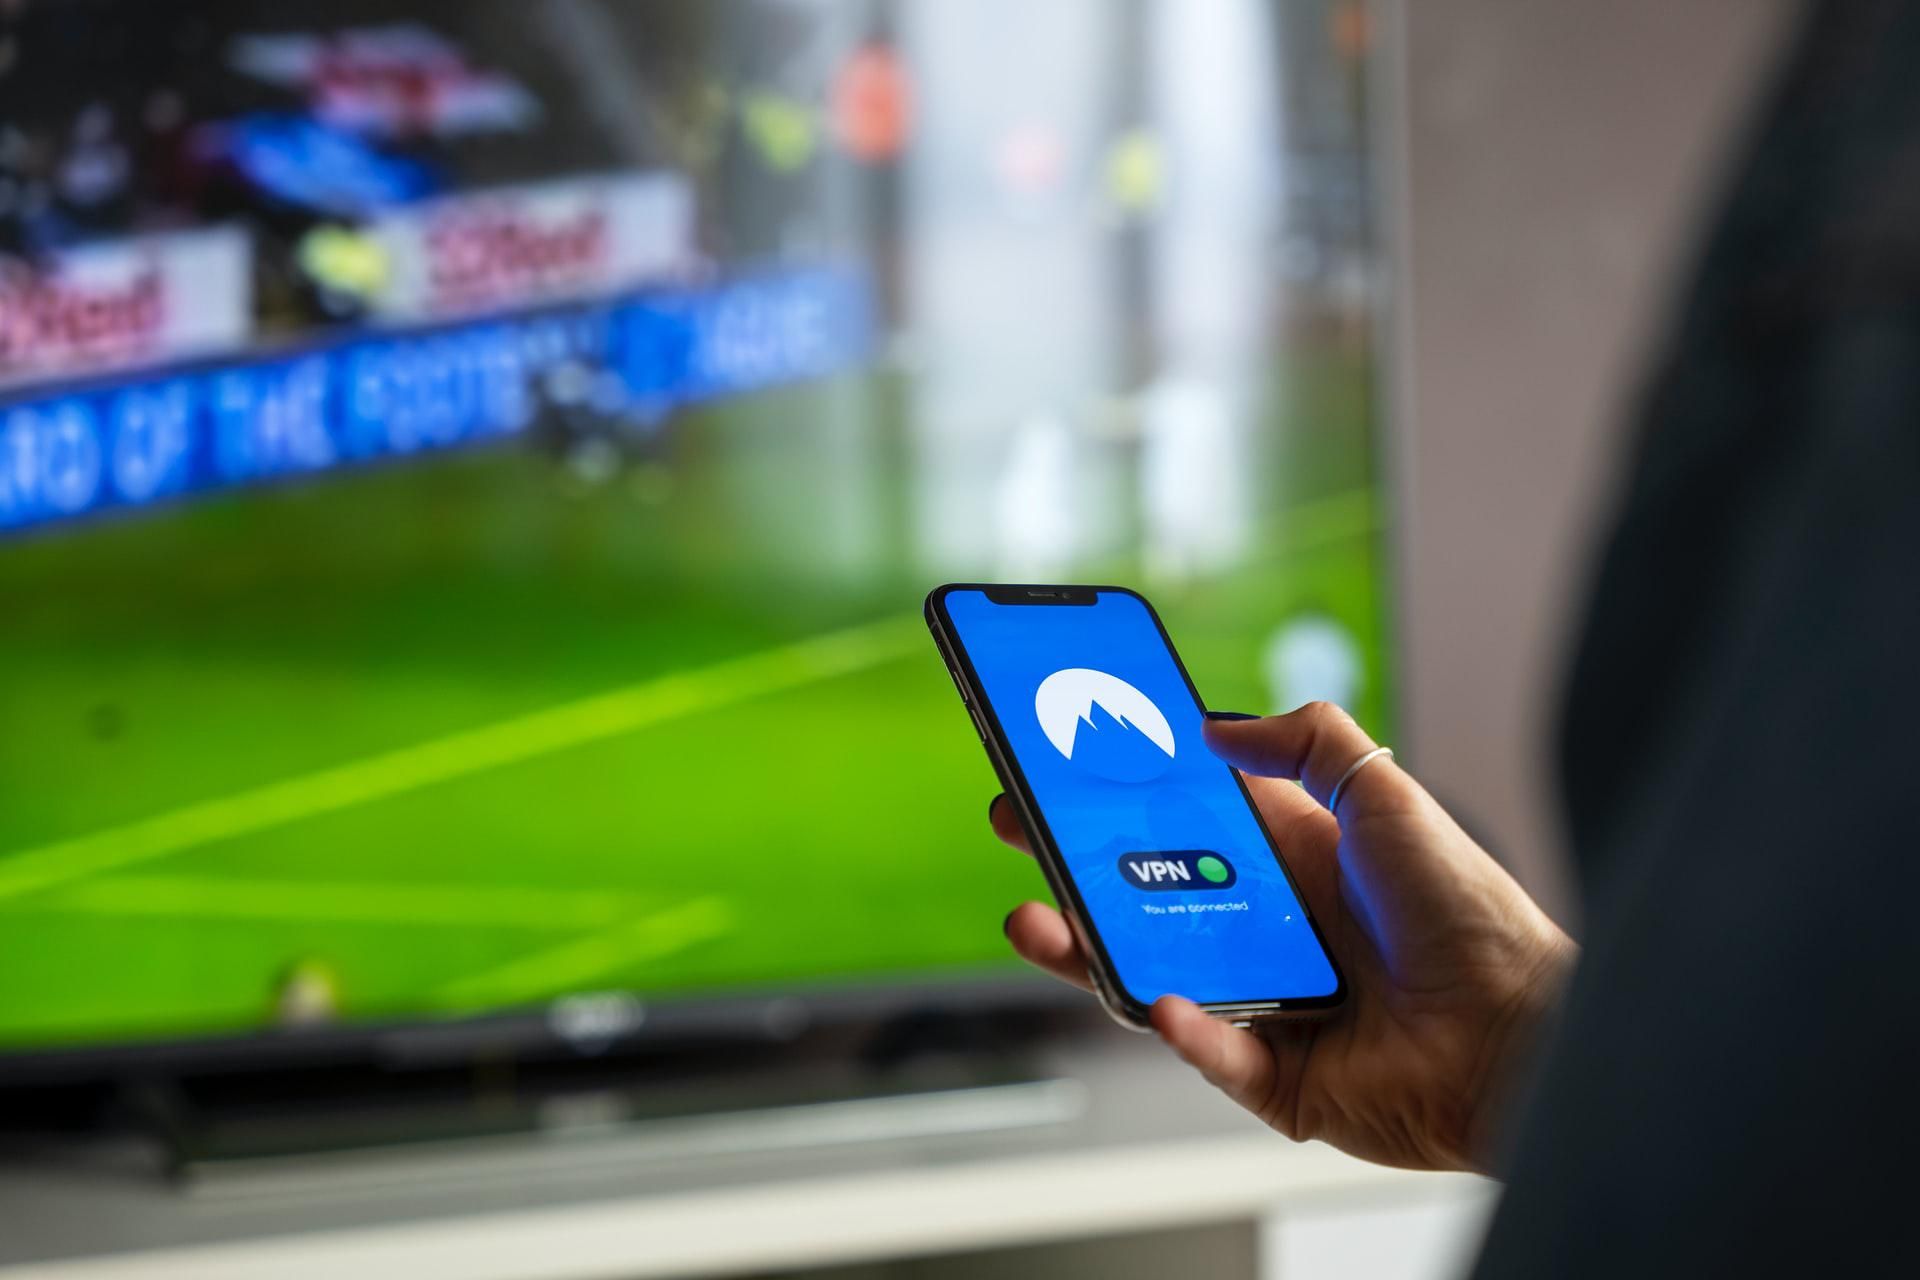 Dofu Sports Live Streaming App - A Popular Online TV Sports Application